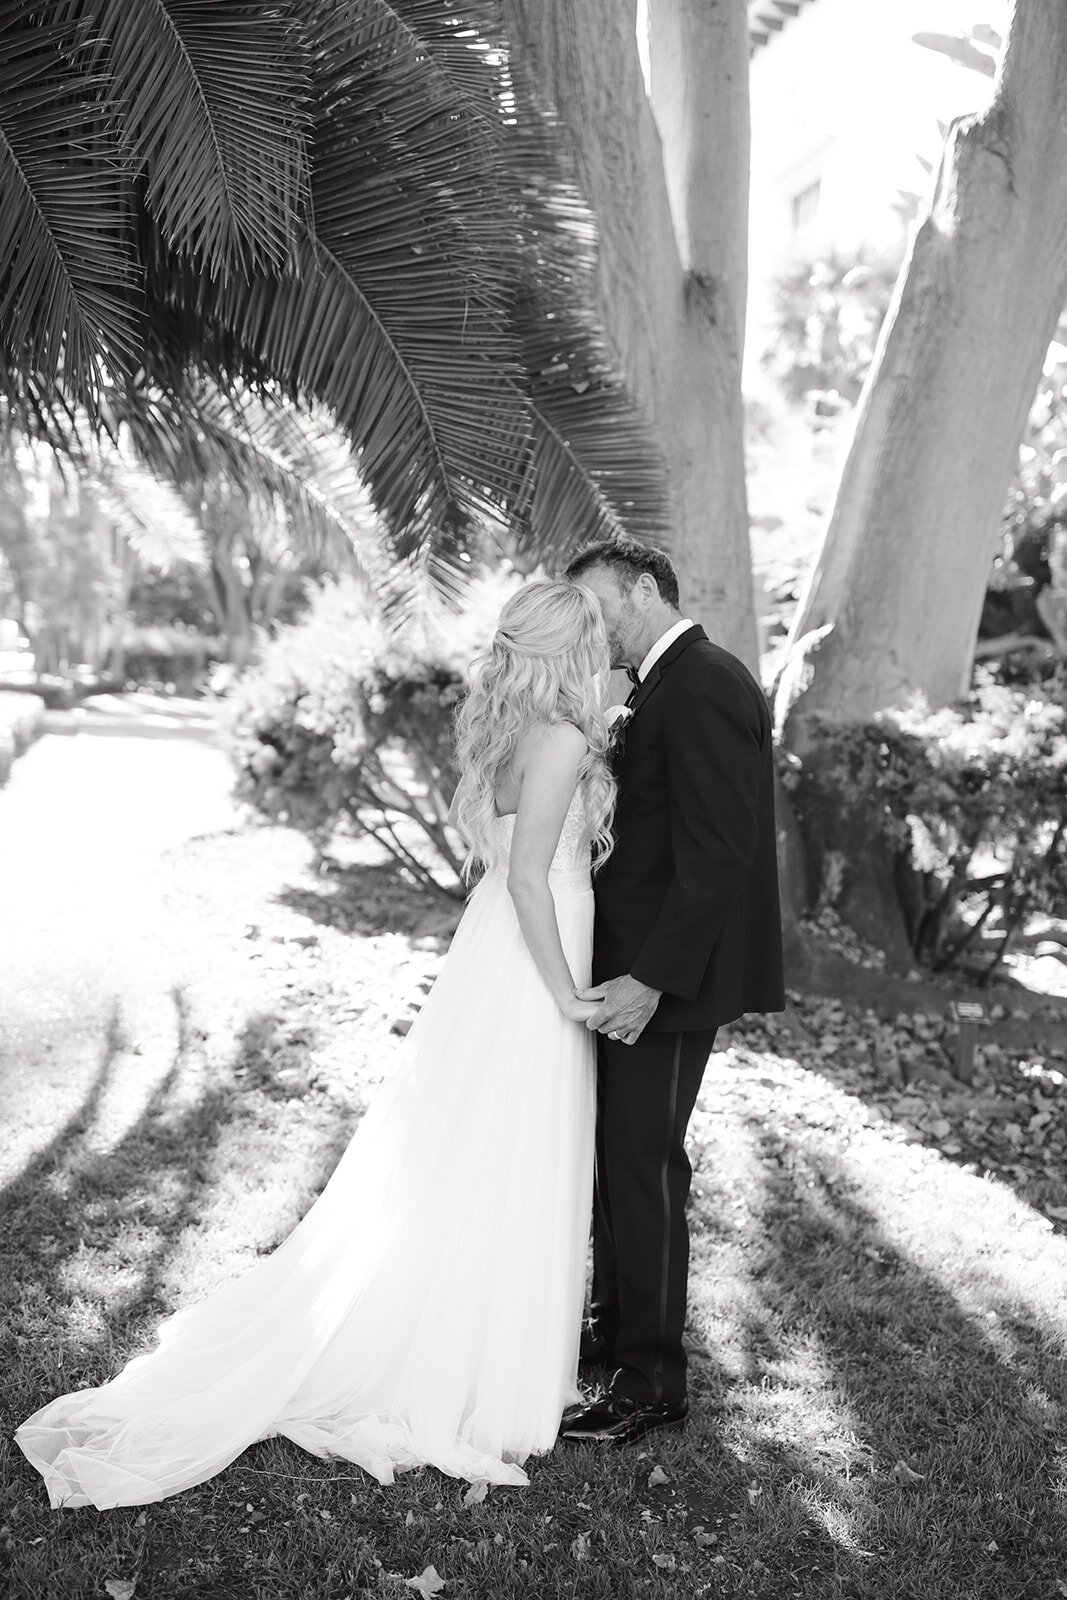 www.santabarbarawedding.com | Santa Barbara Courthouse | Blink Aesthetics | Santa Barbara Classic Weddings | The Dress Bride | Alexis Ireland Florals | Couple Kiss After the Ceremony